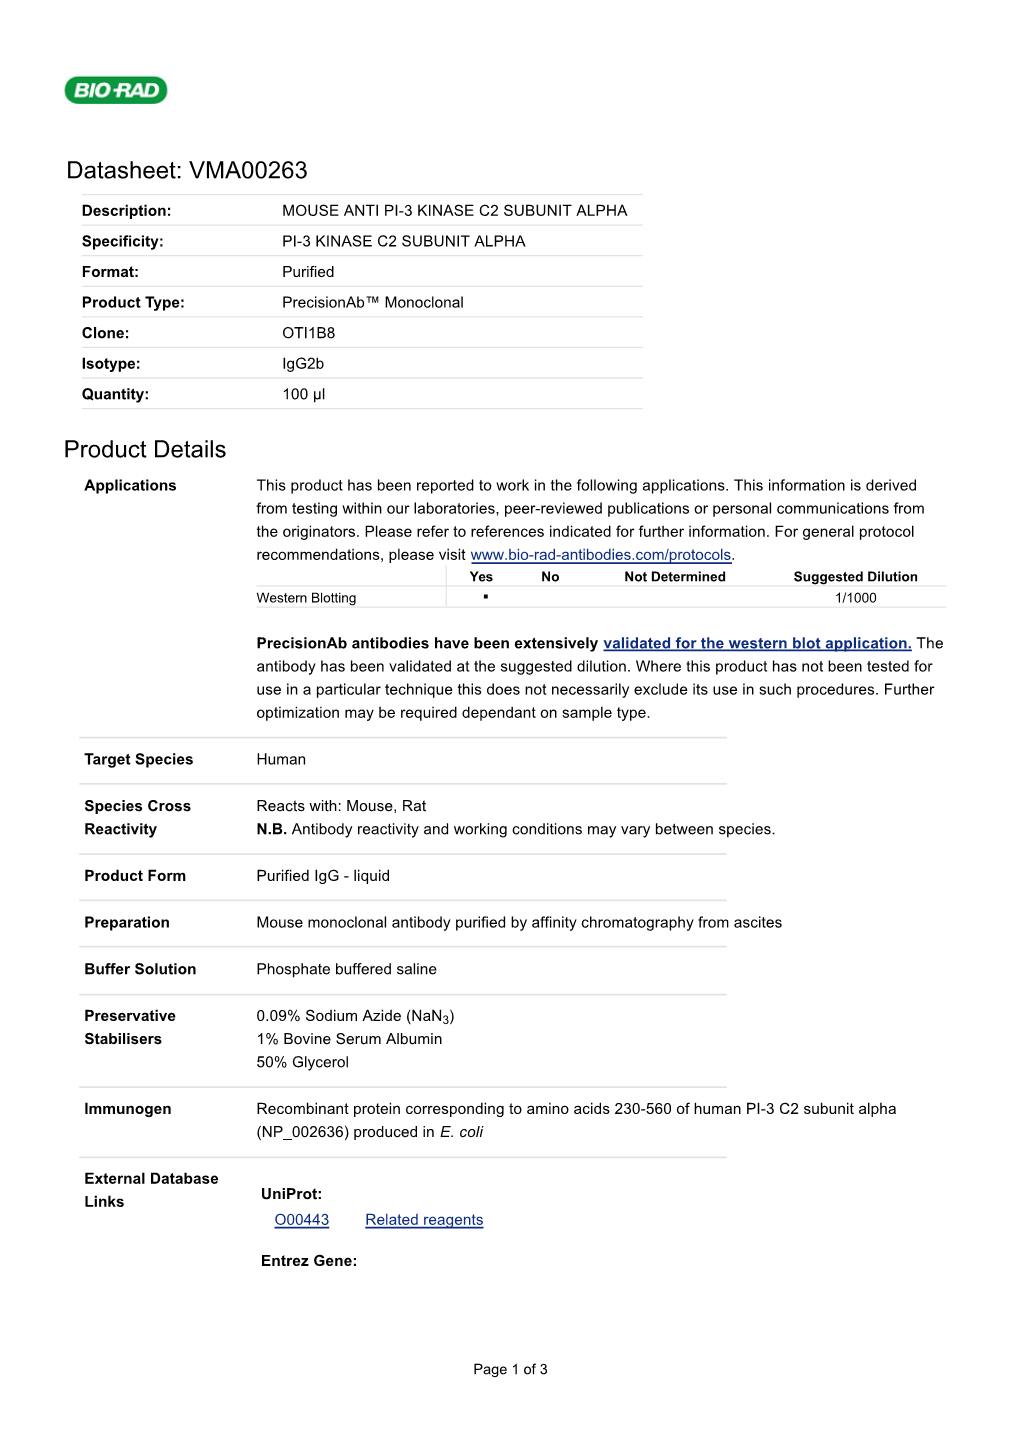 Datasheet: VMA00263 Product Details